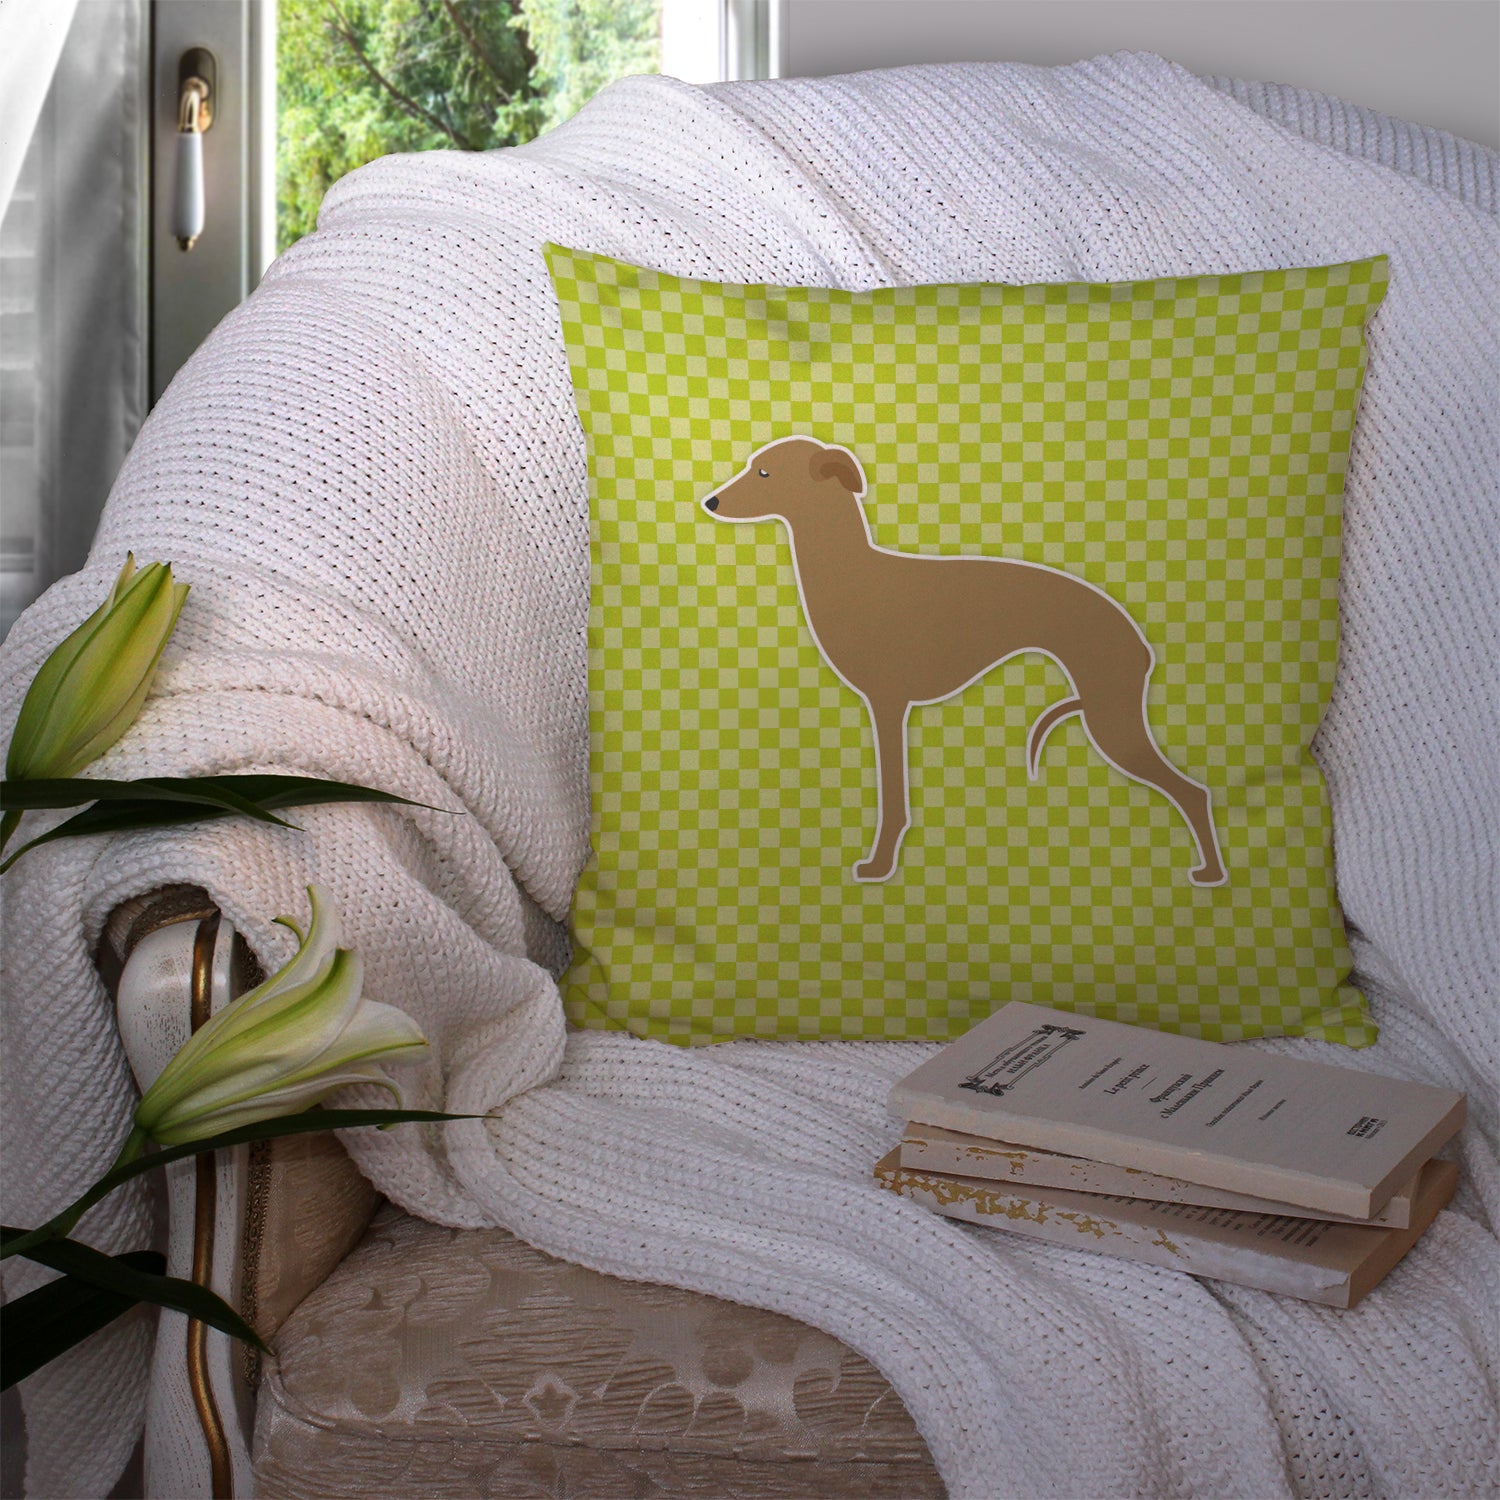 Italian Greyhound Checkerboard Green Fabric Decorative Pillow BB3814PW1414 - the-store.com